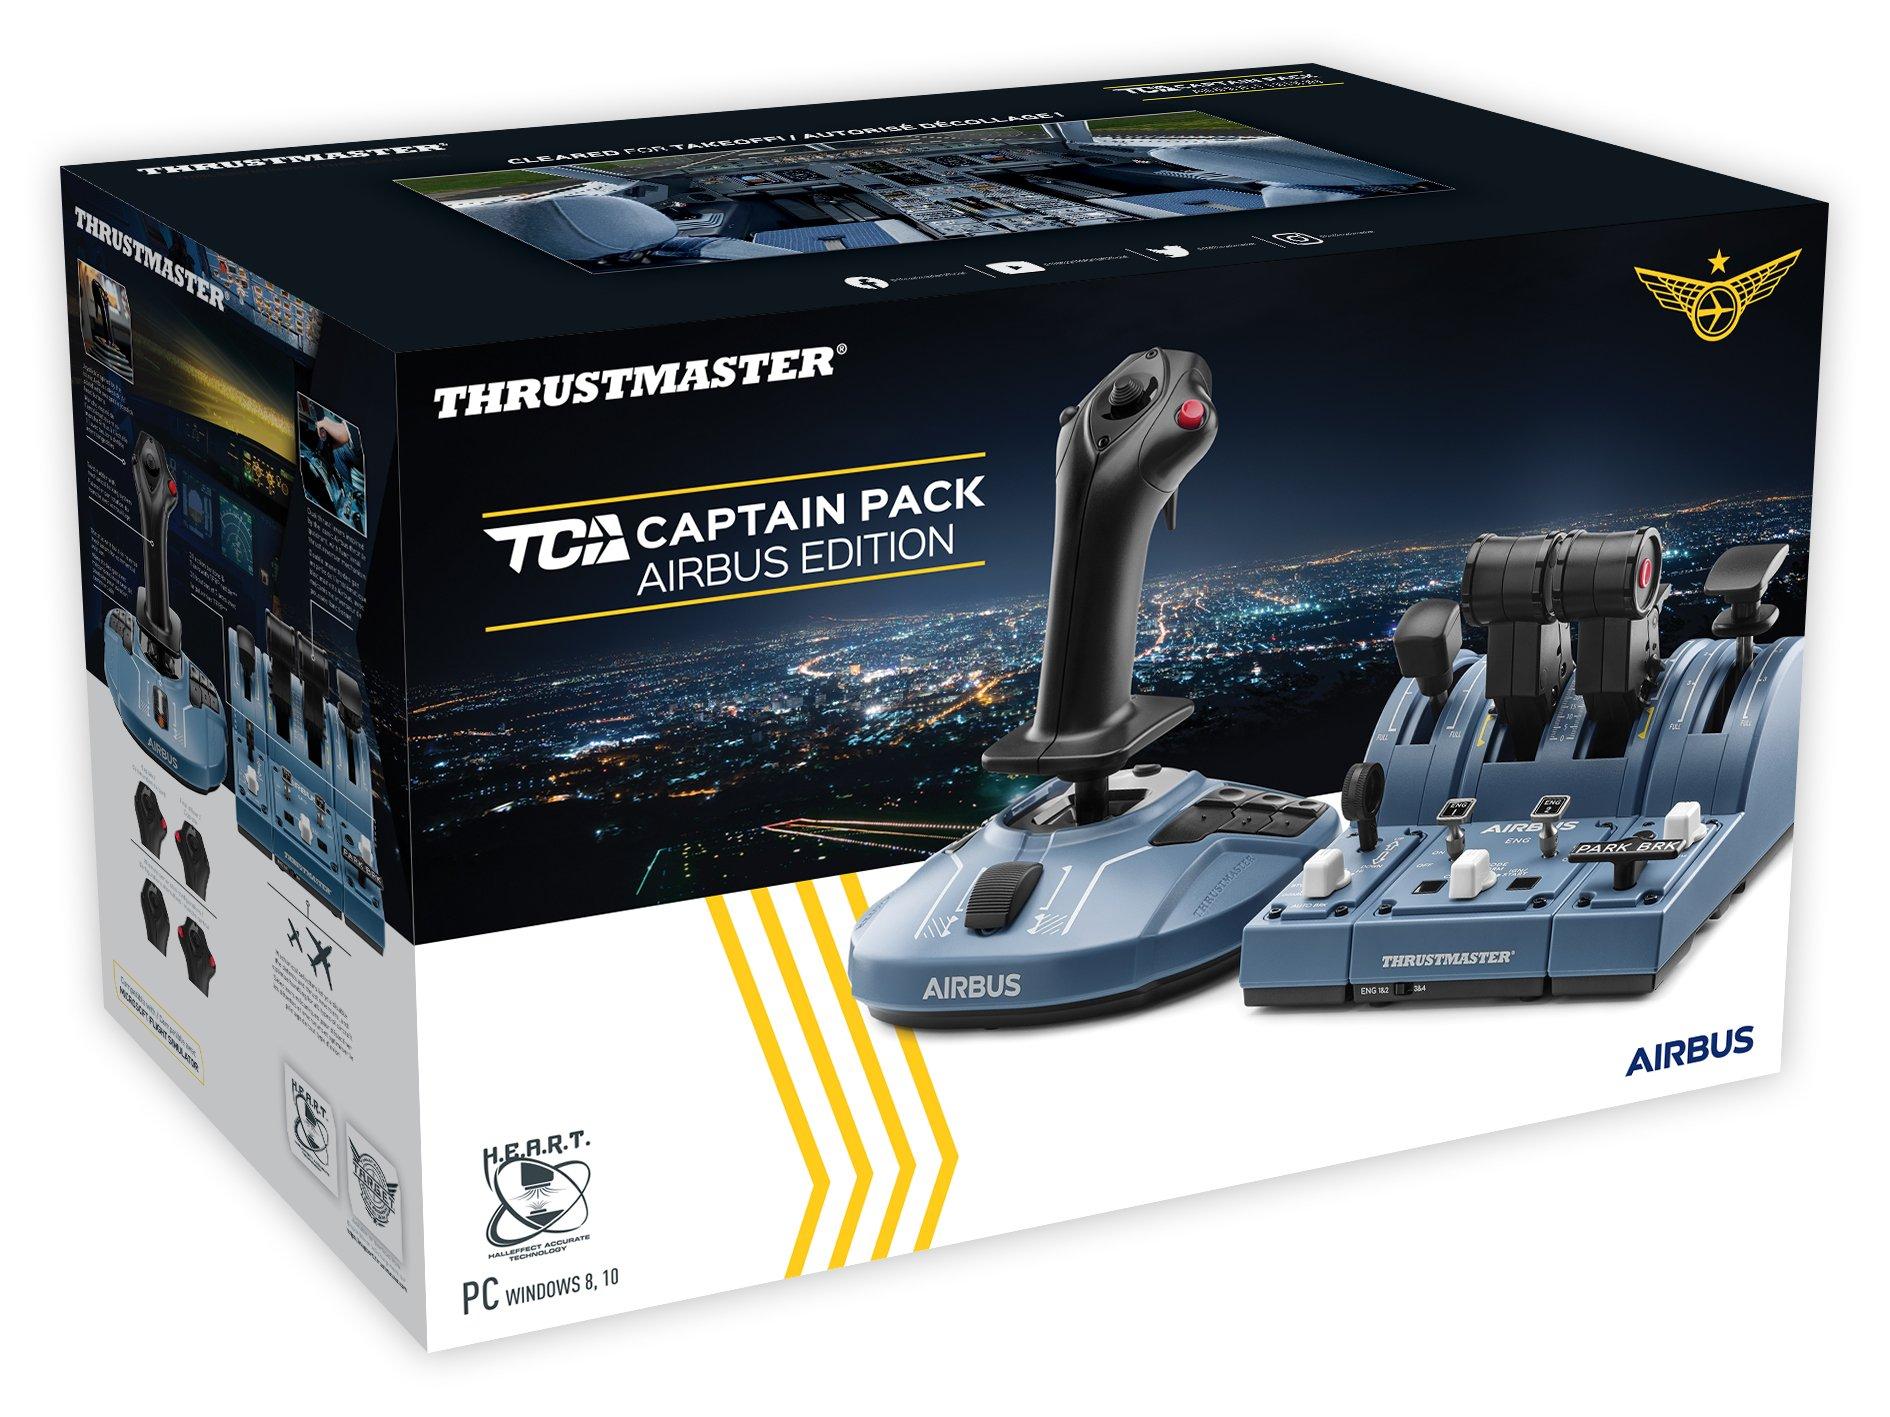 https://media.gamestop.com/i/gamestop/11161255_ALT01/Thrustmaster-TCA-Captain-Pack-Airbus-Edition-Flight-Controller-for-PC?fmt=auto&$pdp-gallery$